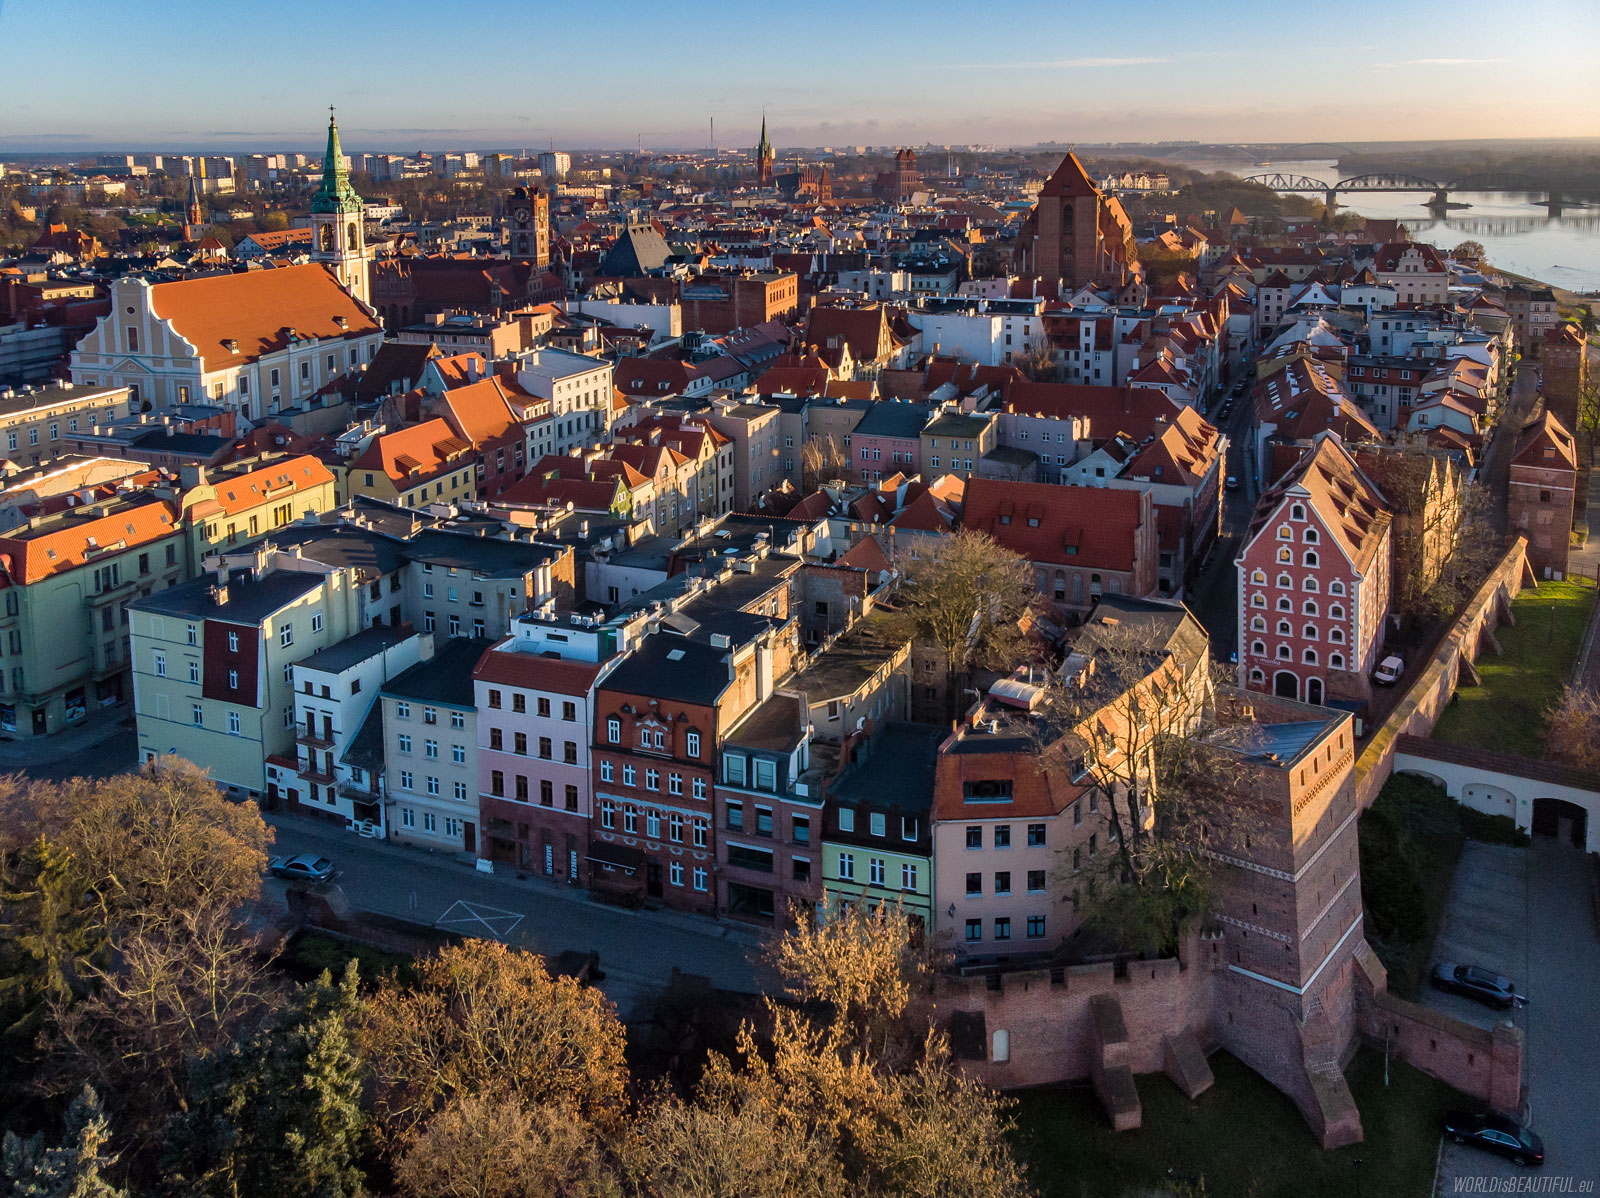 Toruń from a bird's eye view